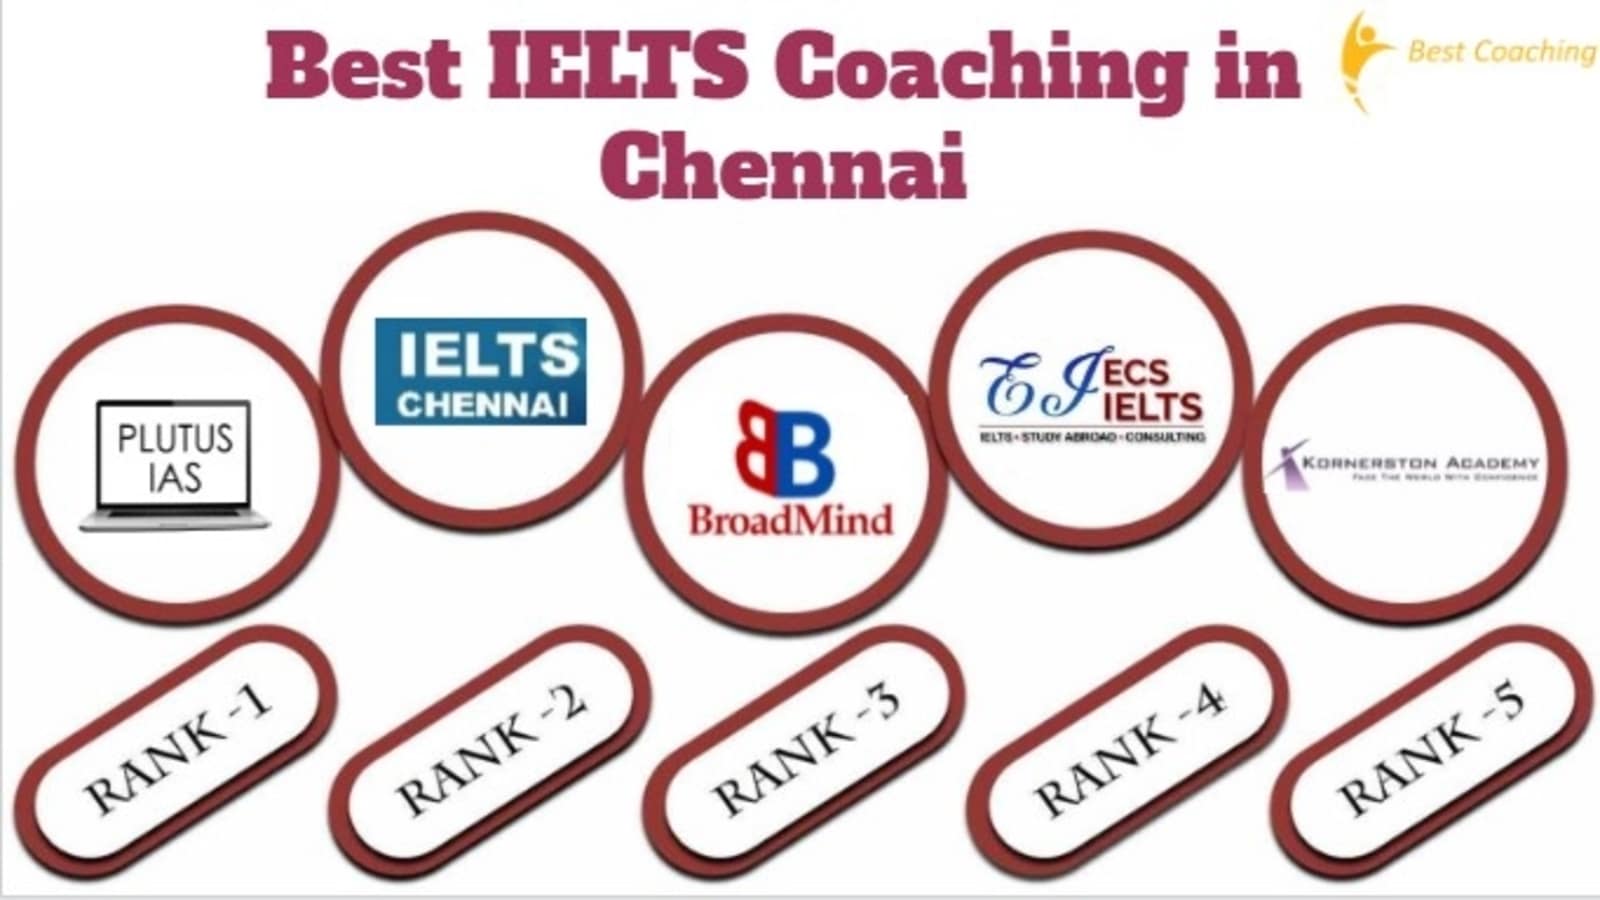 Best IELTS Coaching in Chennai